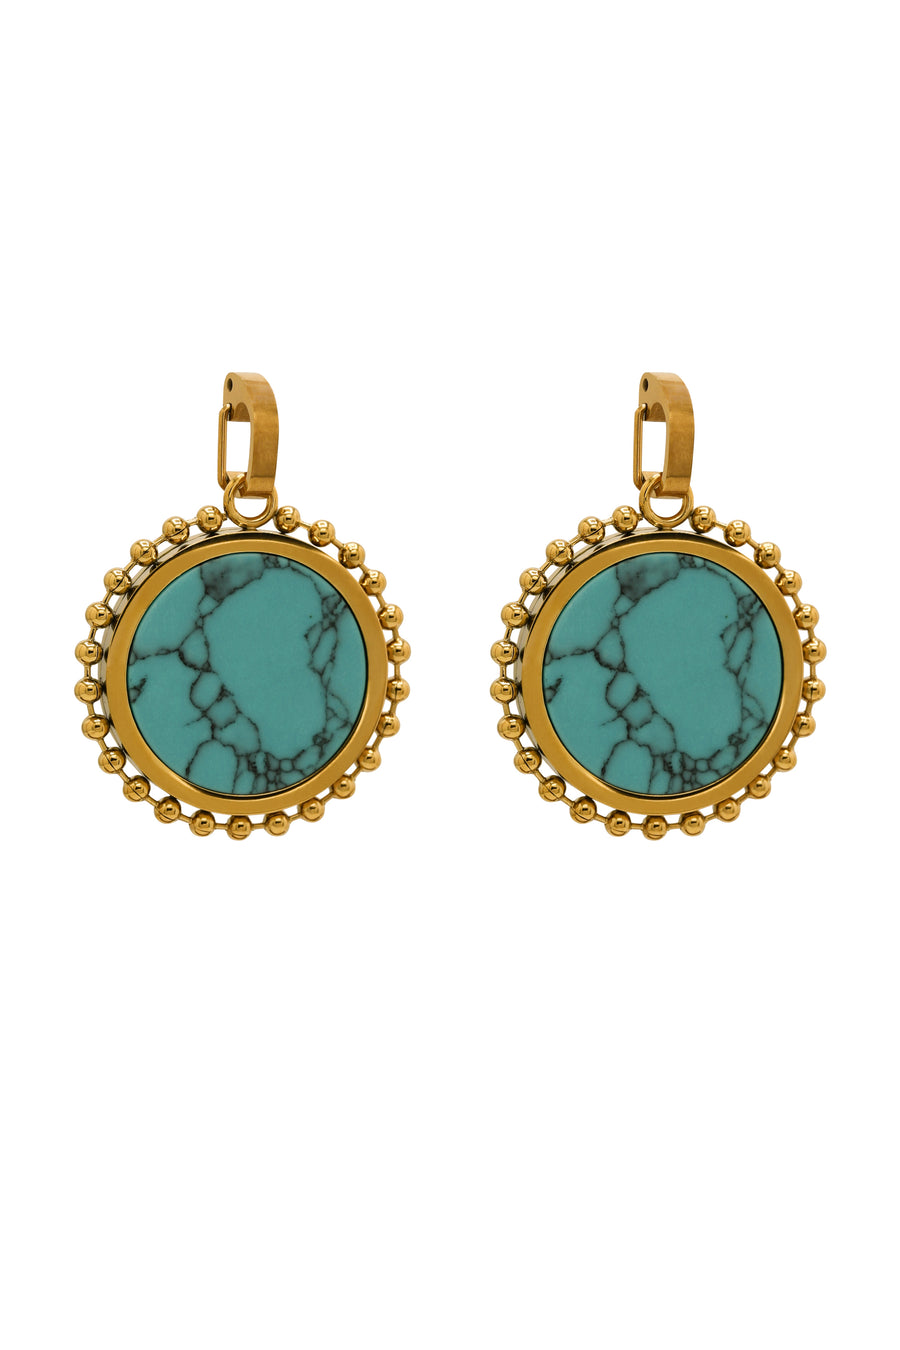 Turquoise Stone & Tile Pendant Gift Set